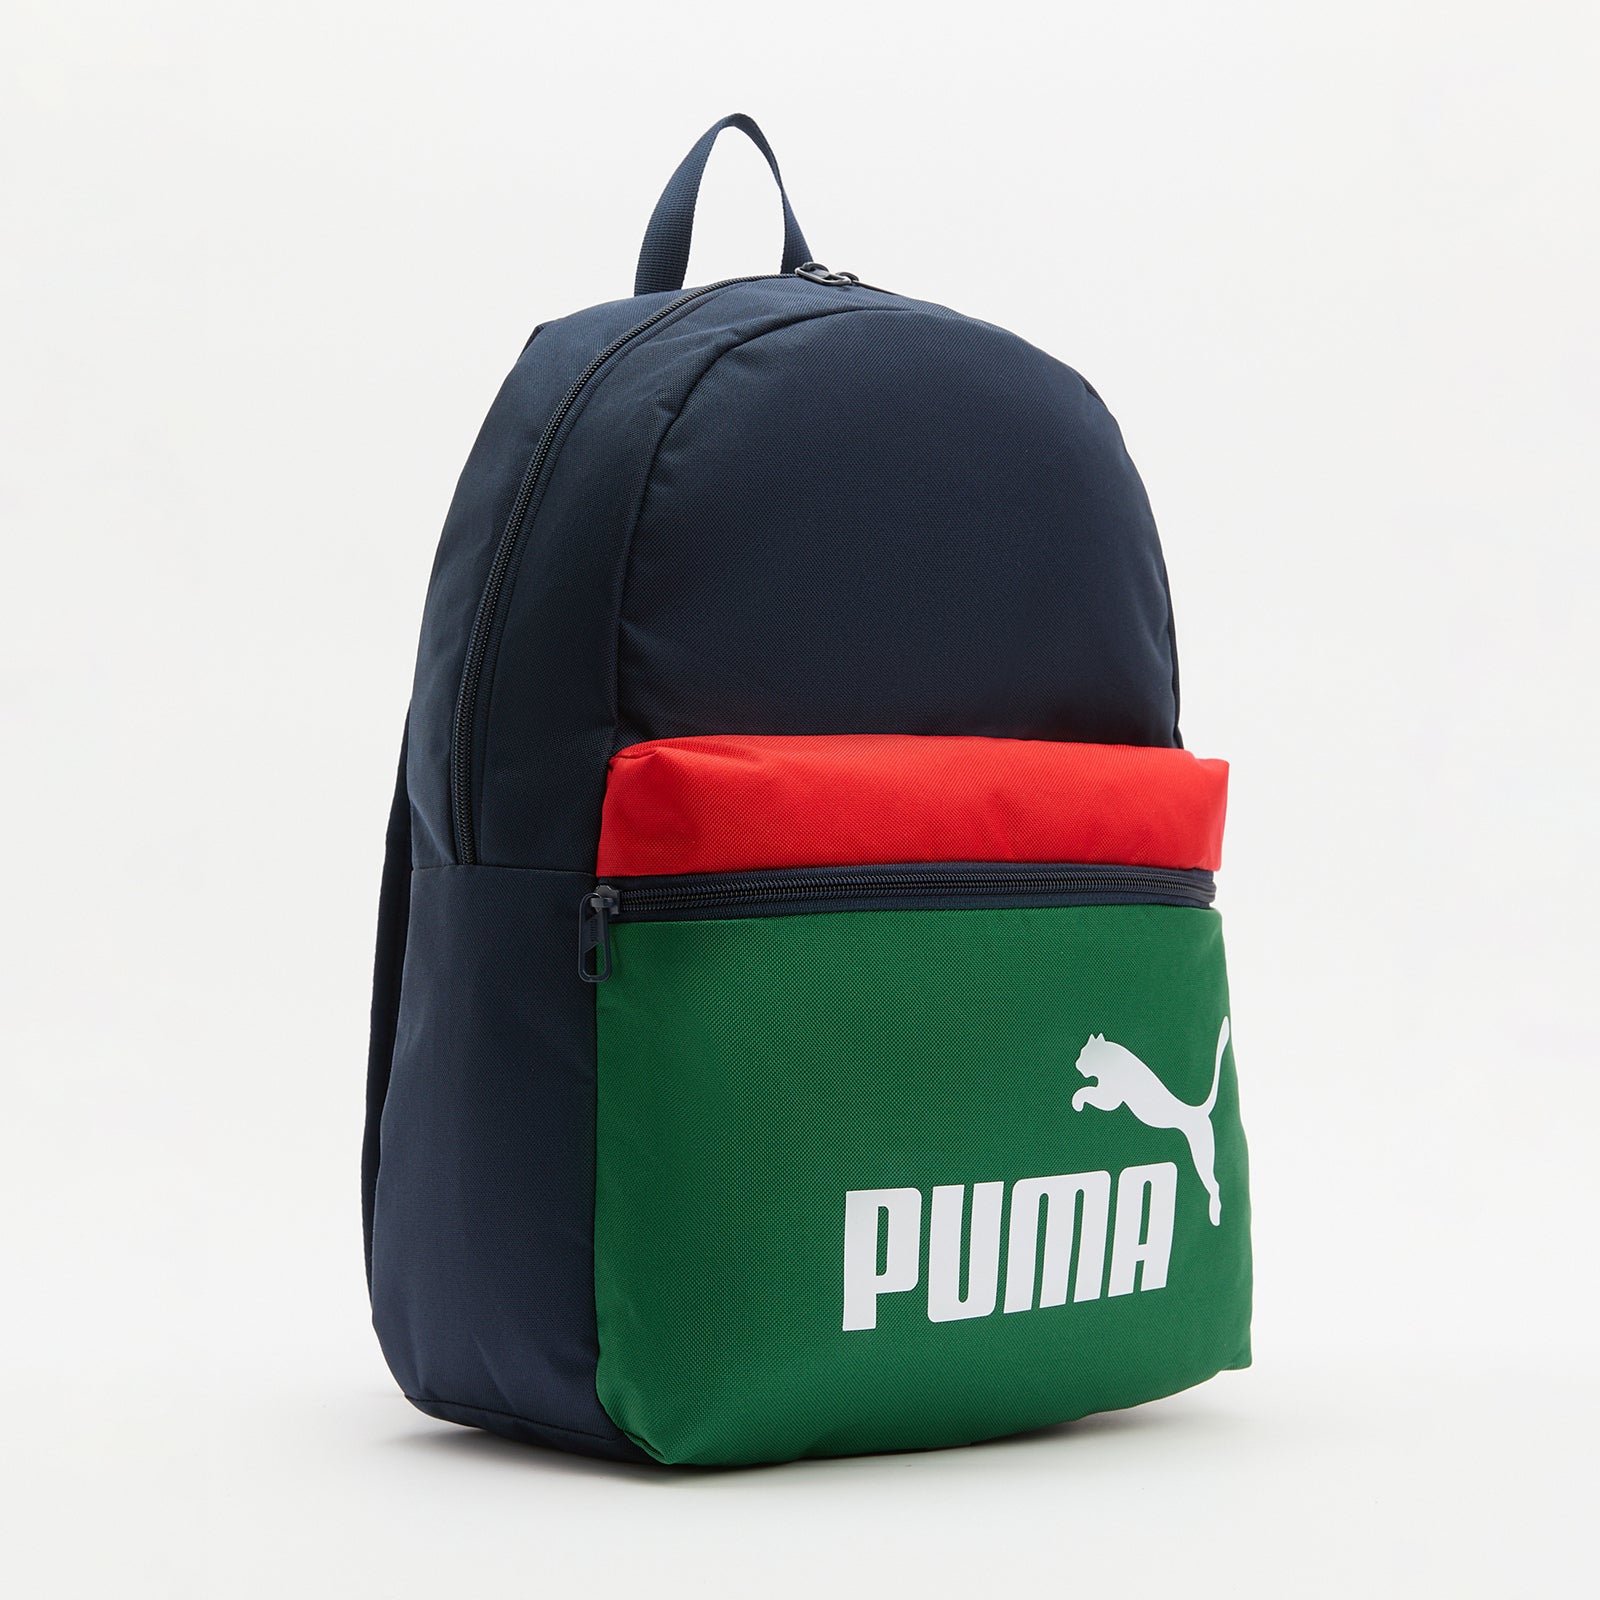 Mochila Puma Phase Backpack Colorblock